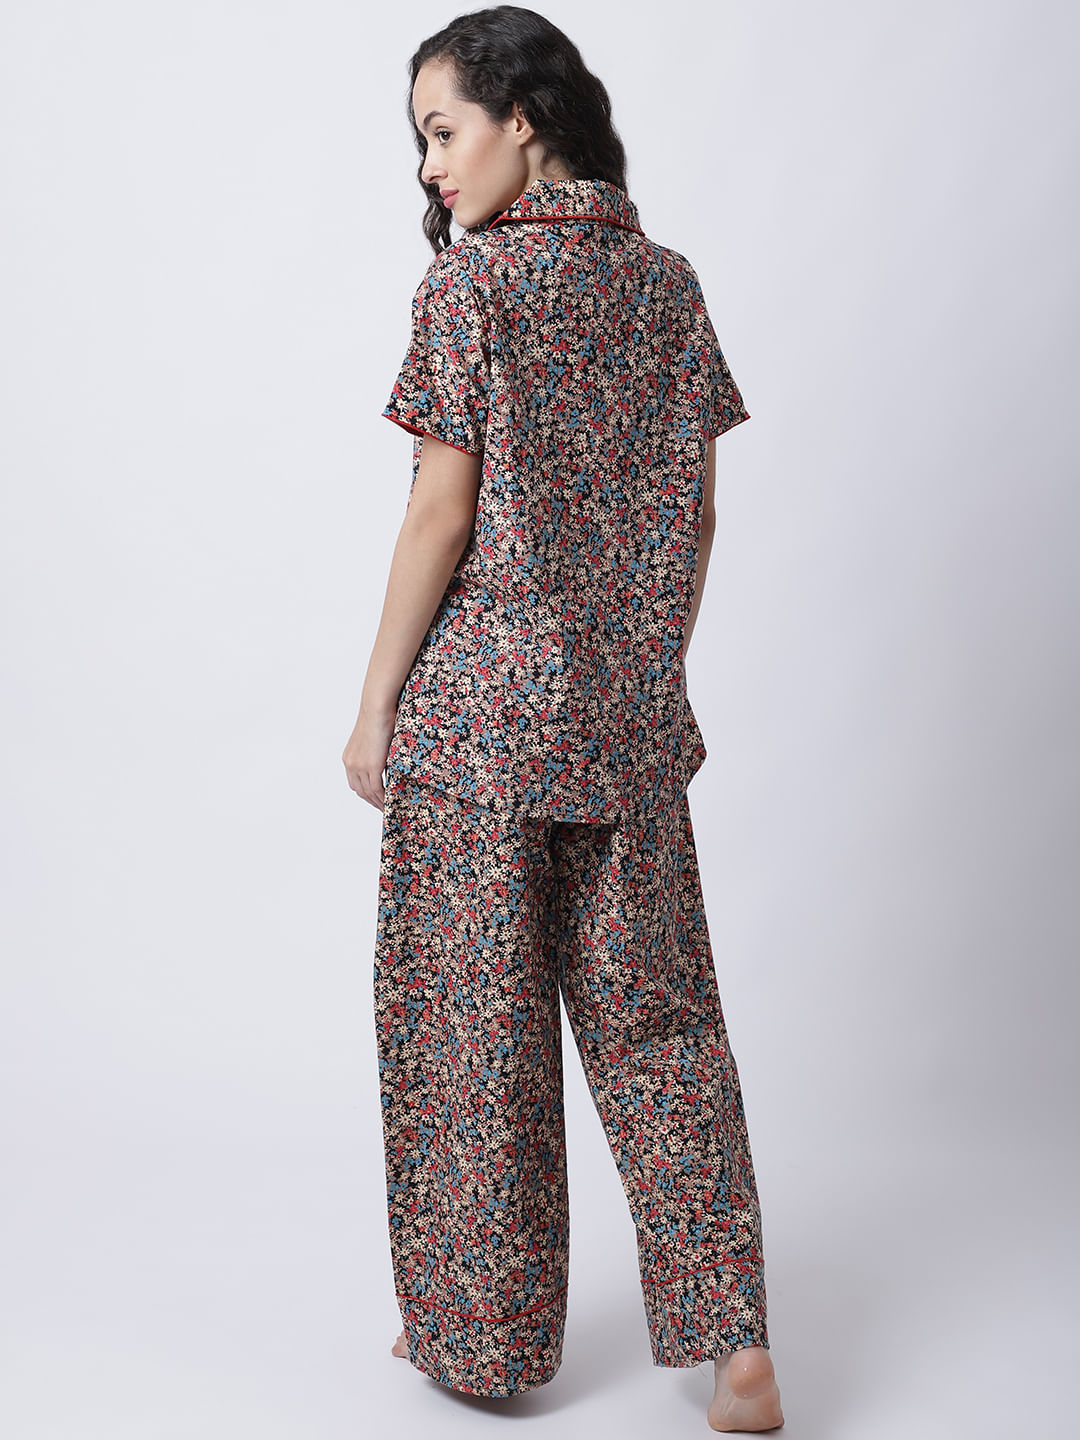 Cotton Floral Printed Night Suit set of Shirt & Pyjama trouser